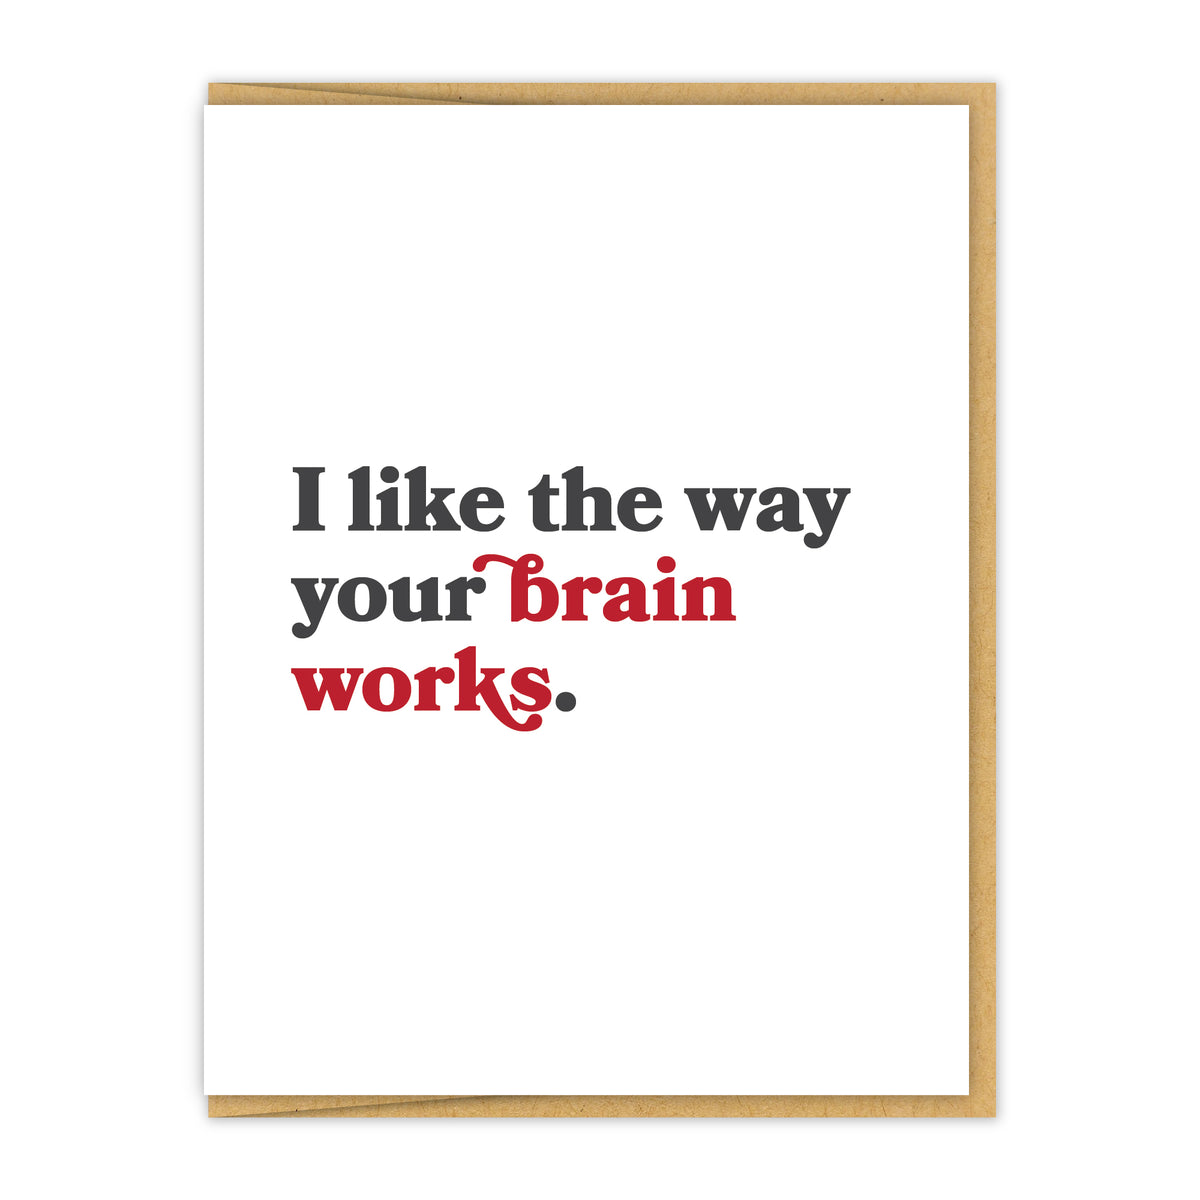 I like the way your brain works